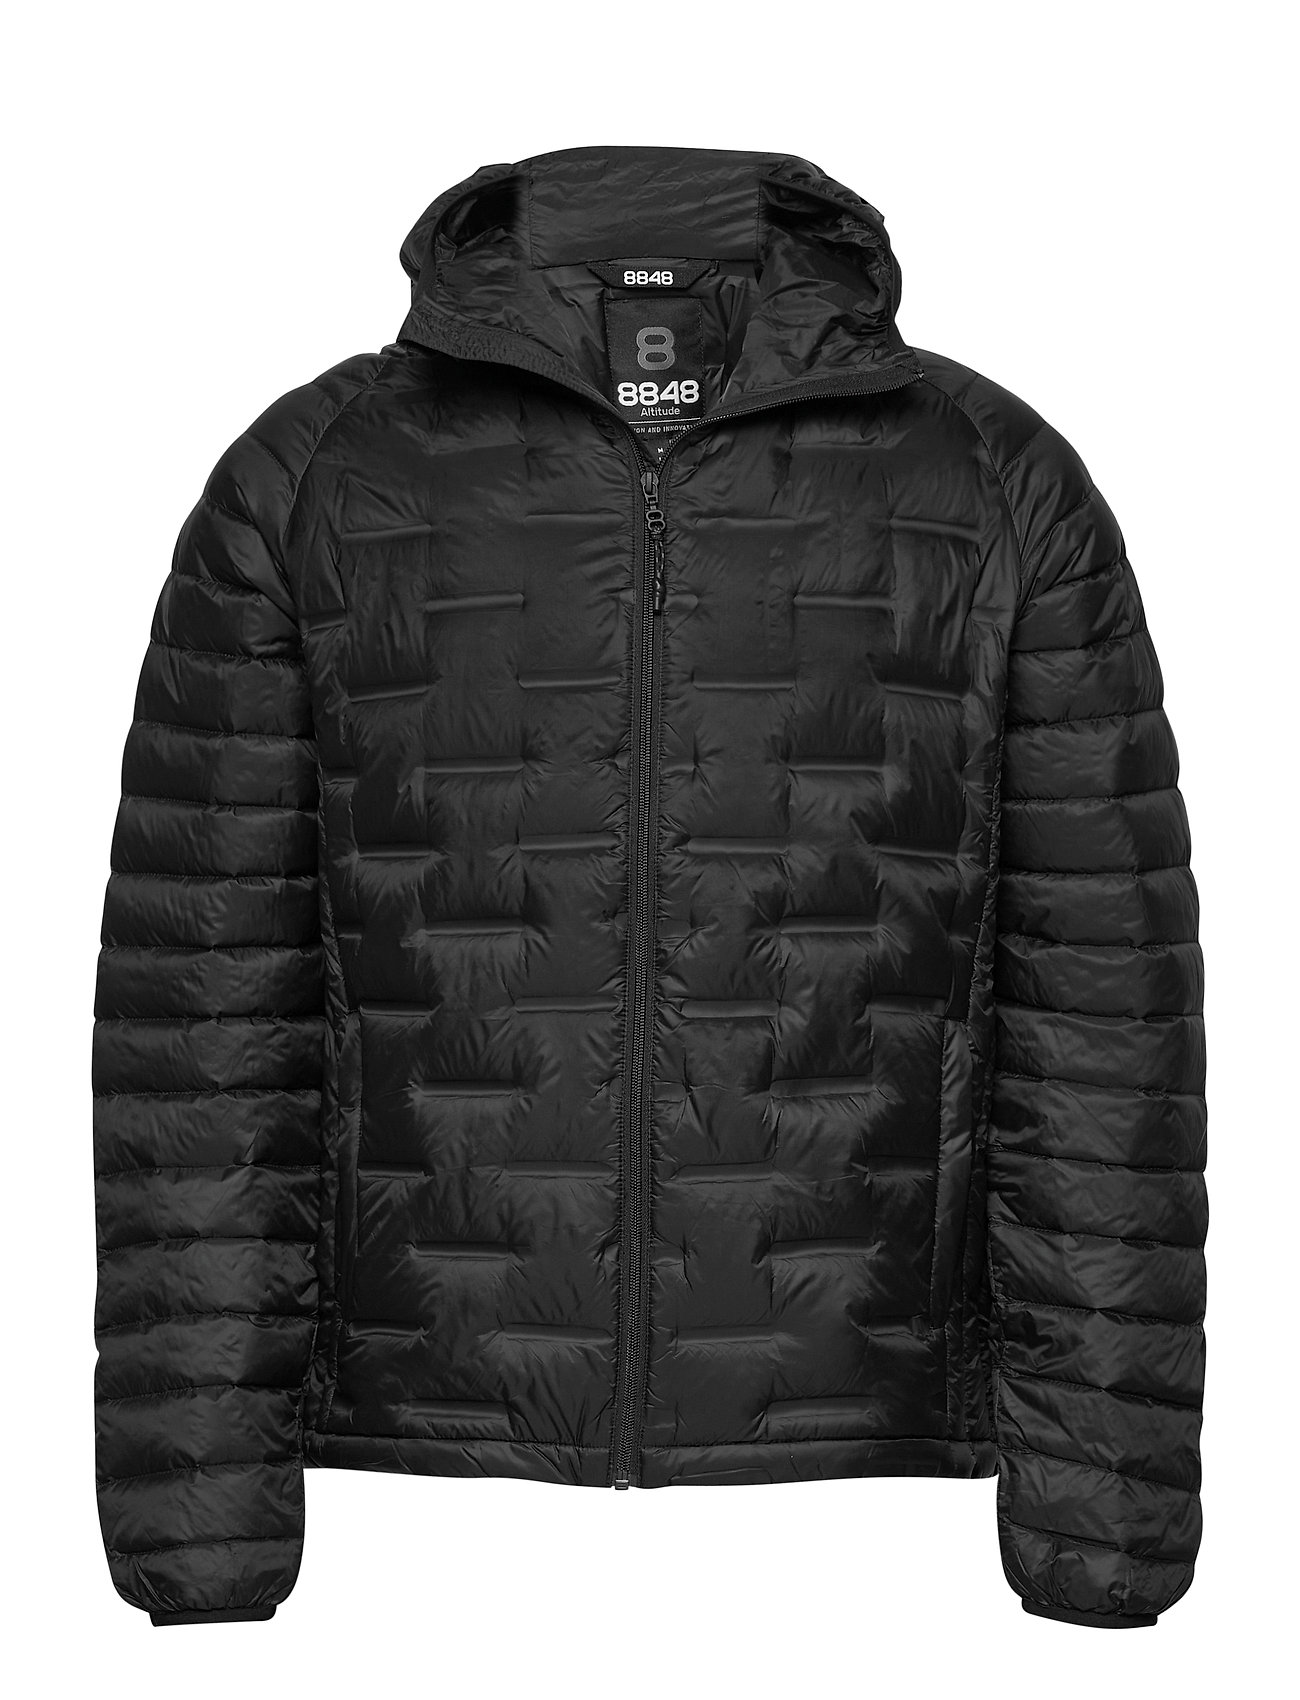 Convert Jacket Outerwear Sport Jackets Musta 8848 Altitude